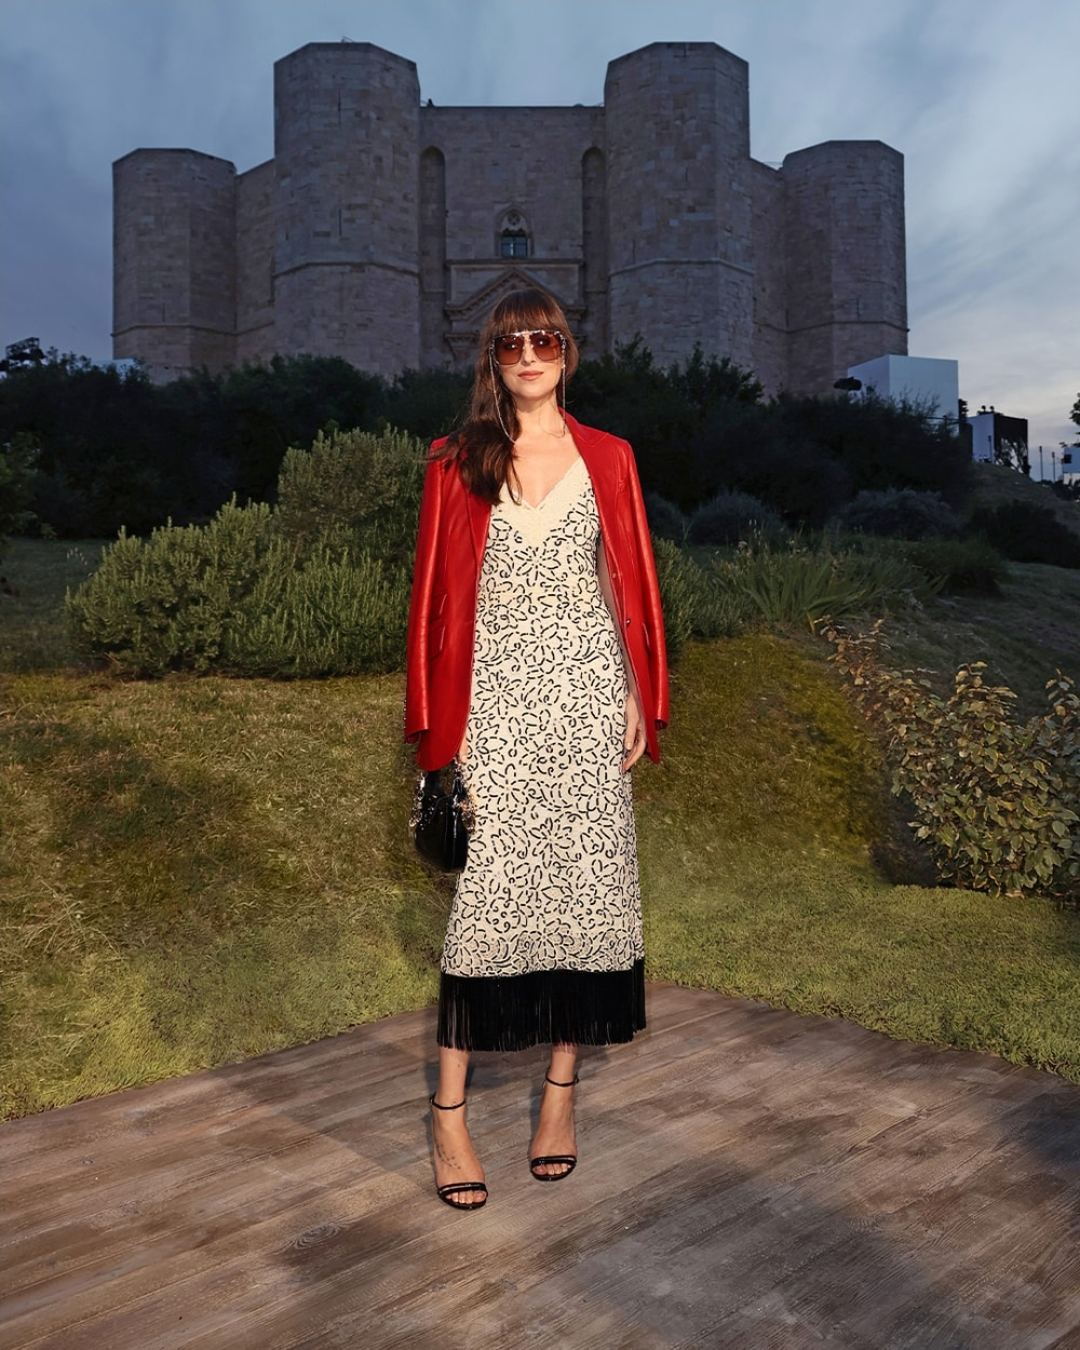 Dakota Johnson at Gucci Cosmogonie – Castel del Monte on May 16